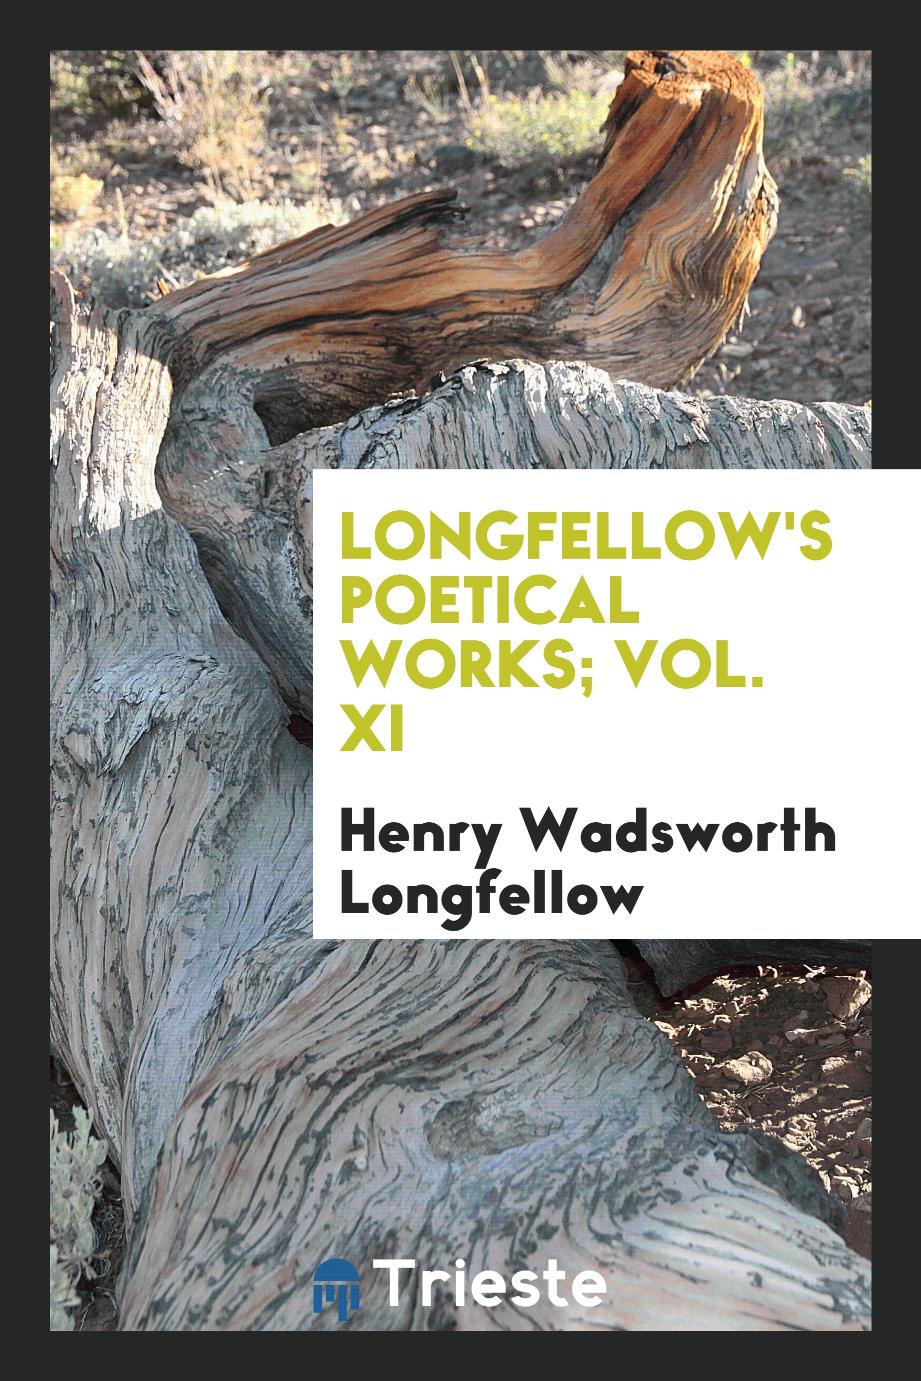 Longfellow's poetical works; Vol. XI